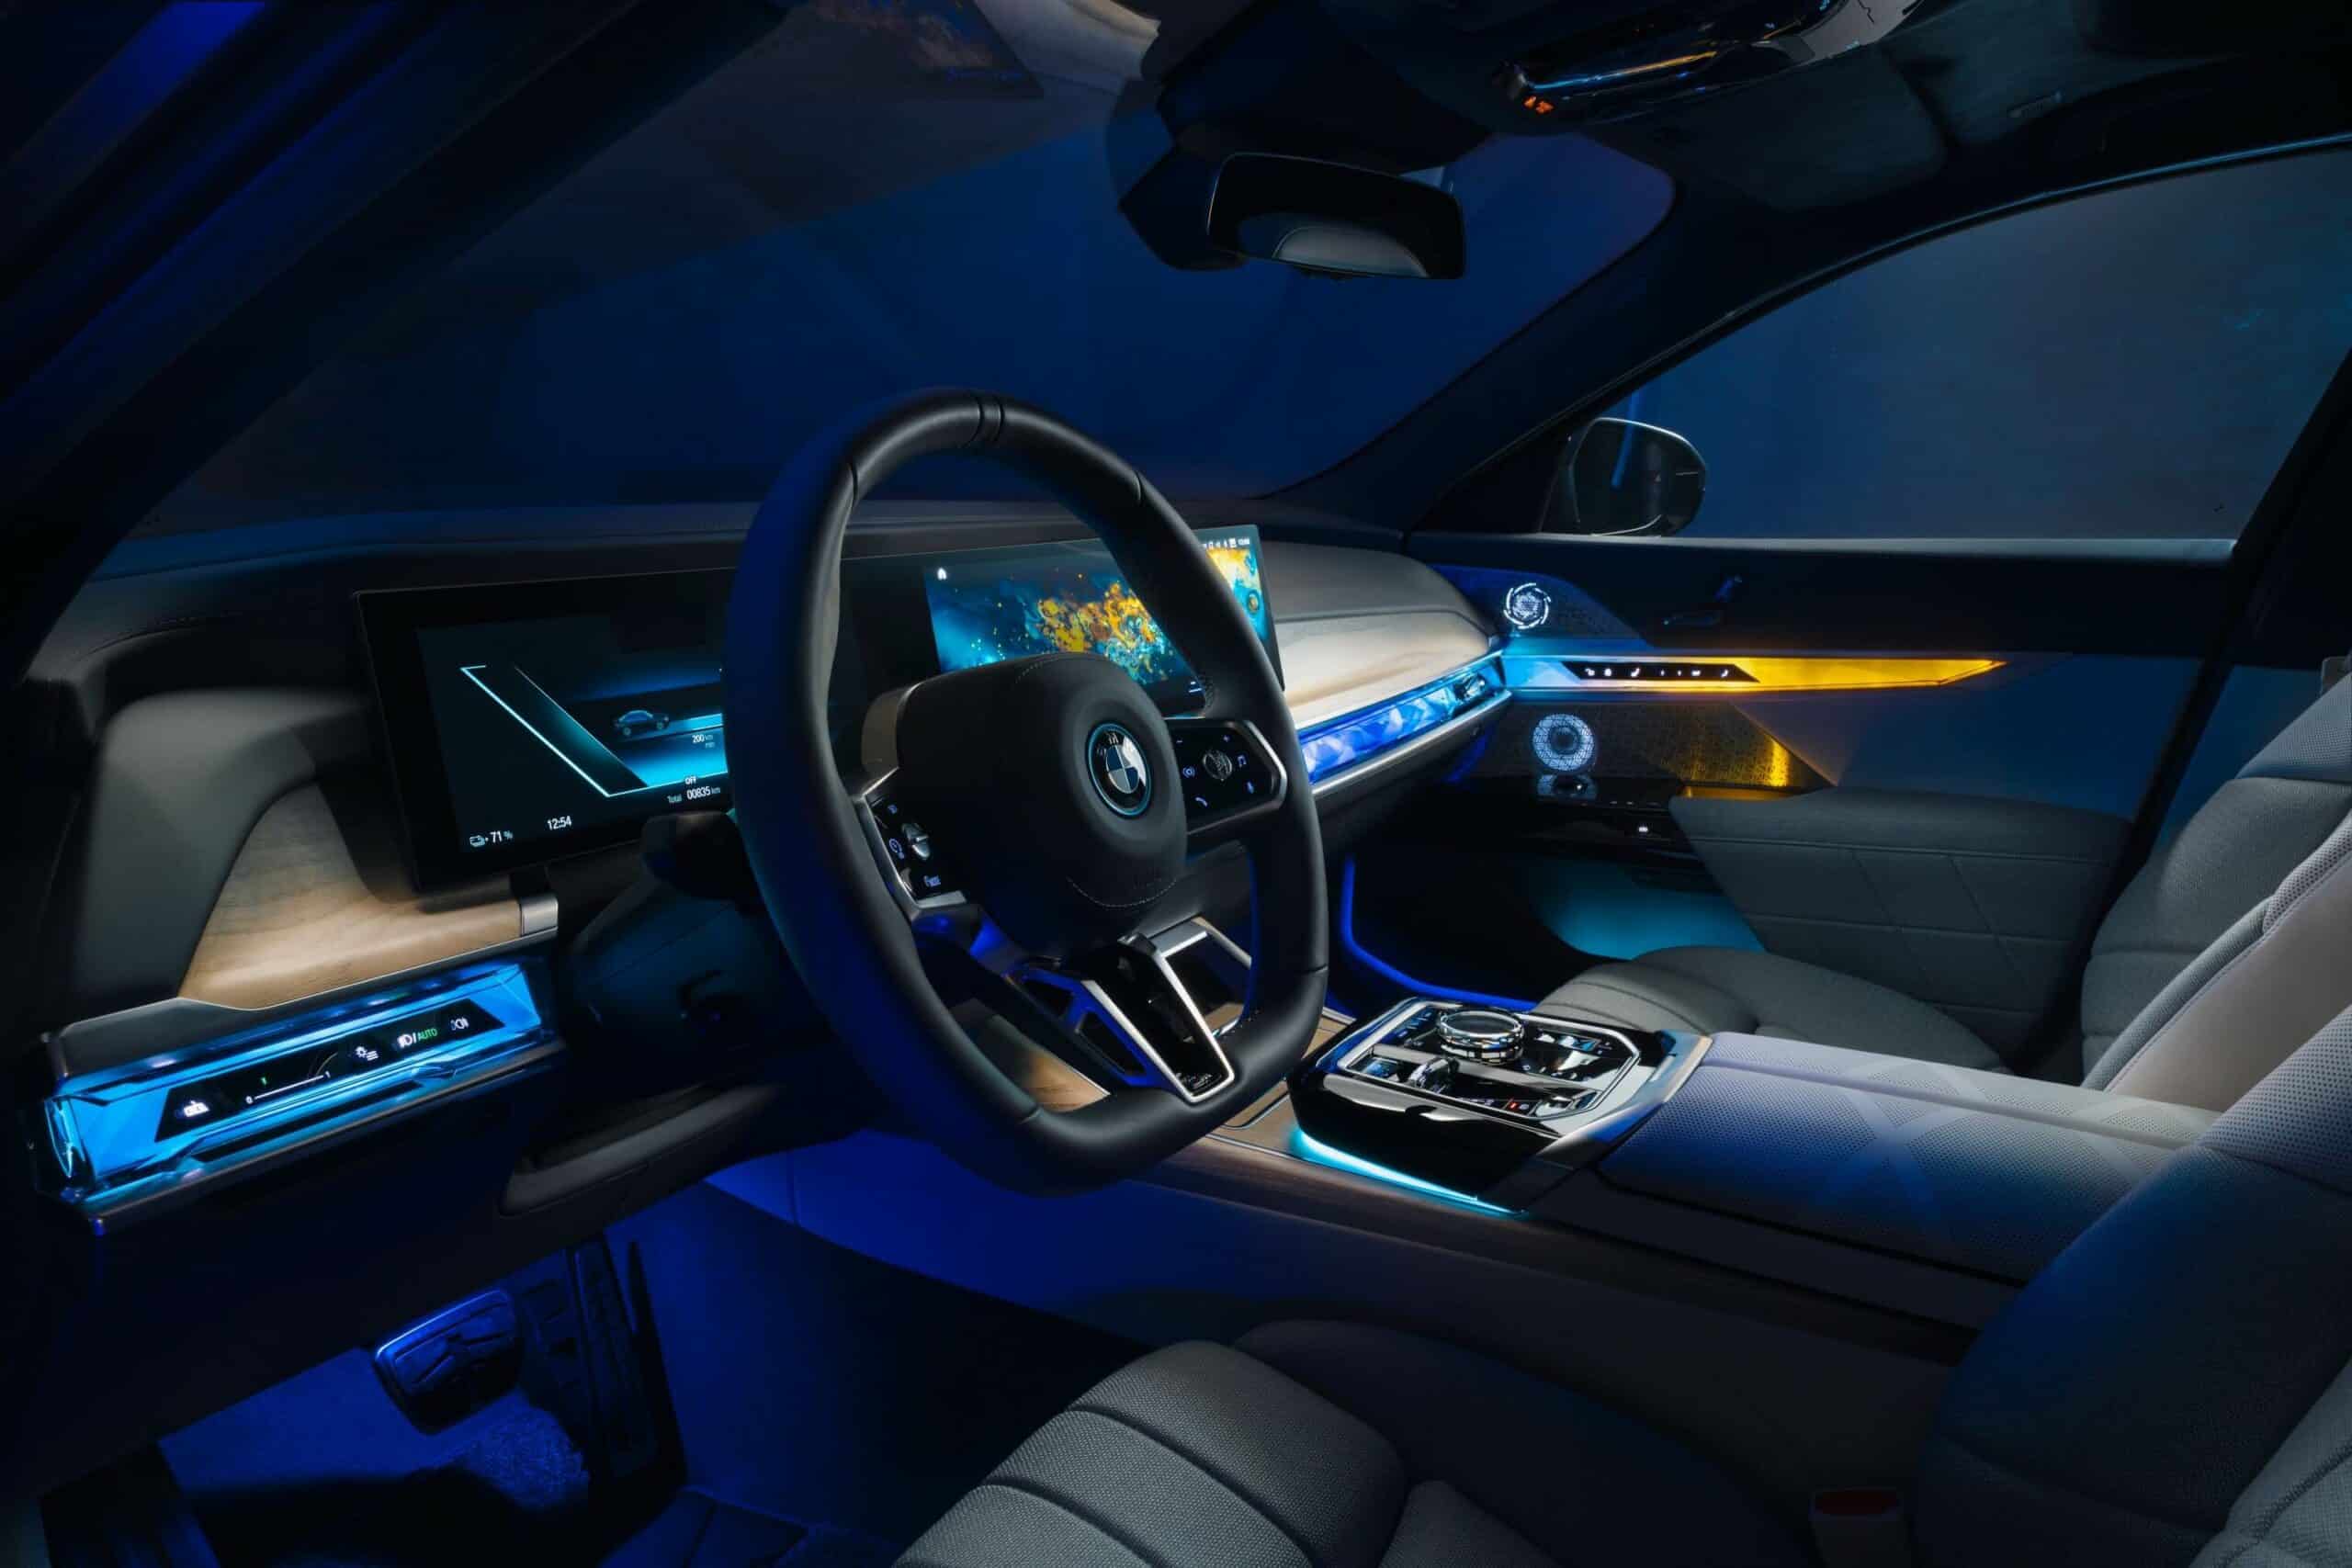 The 10 Best Car Interiors of 2022 According to WardsAuto - 1/11